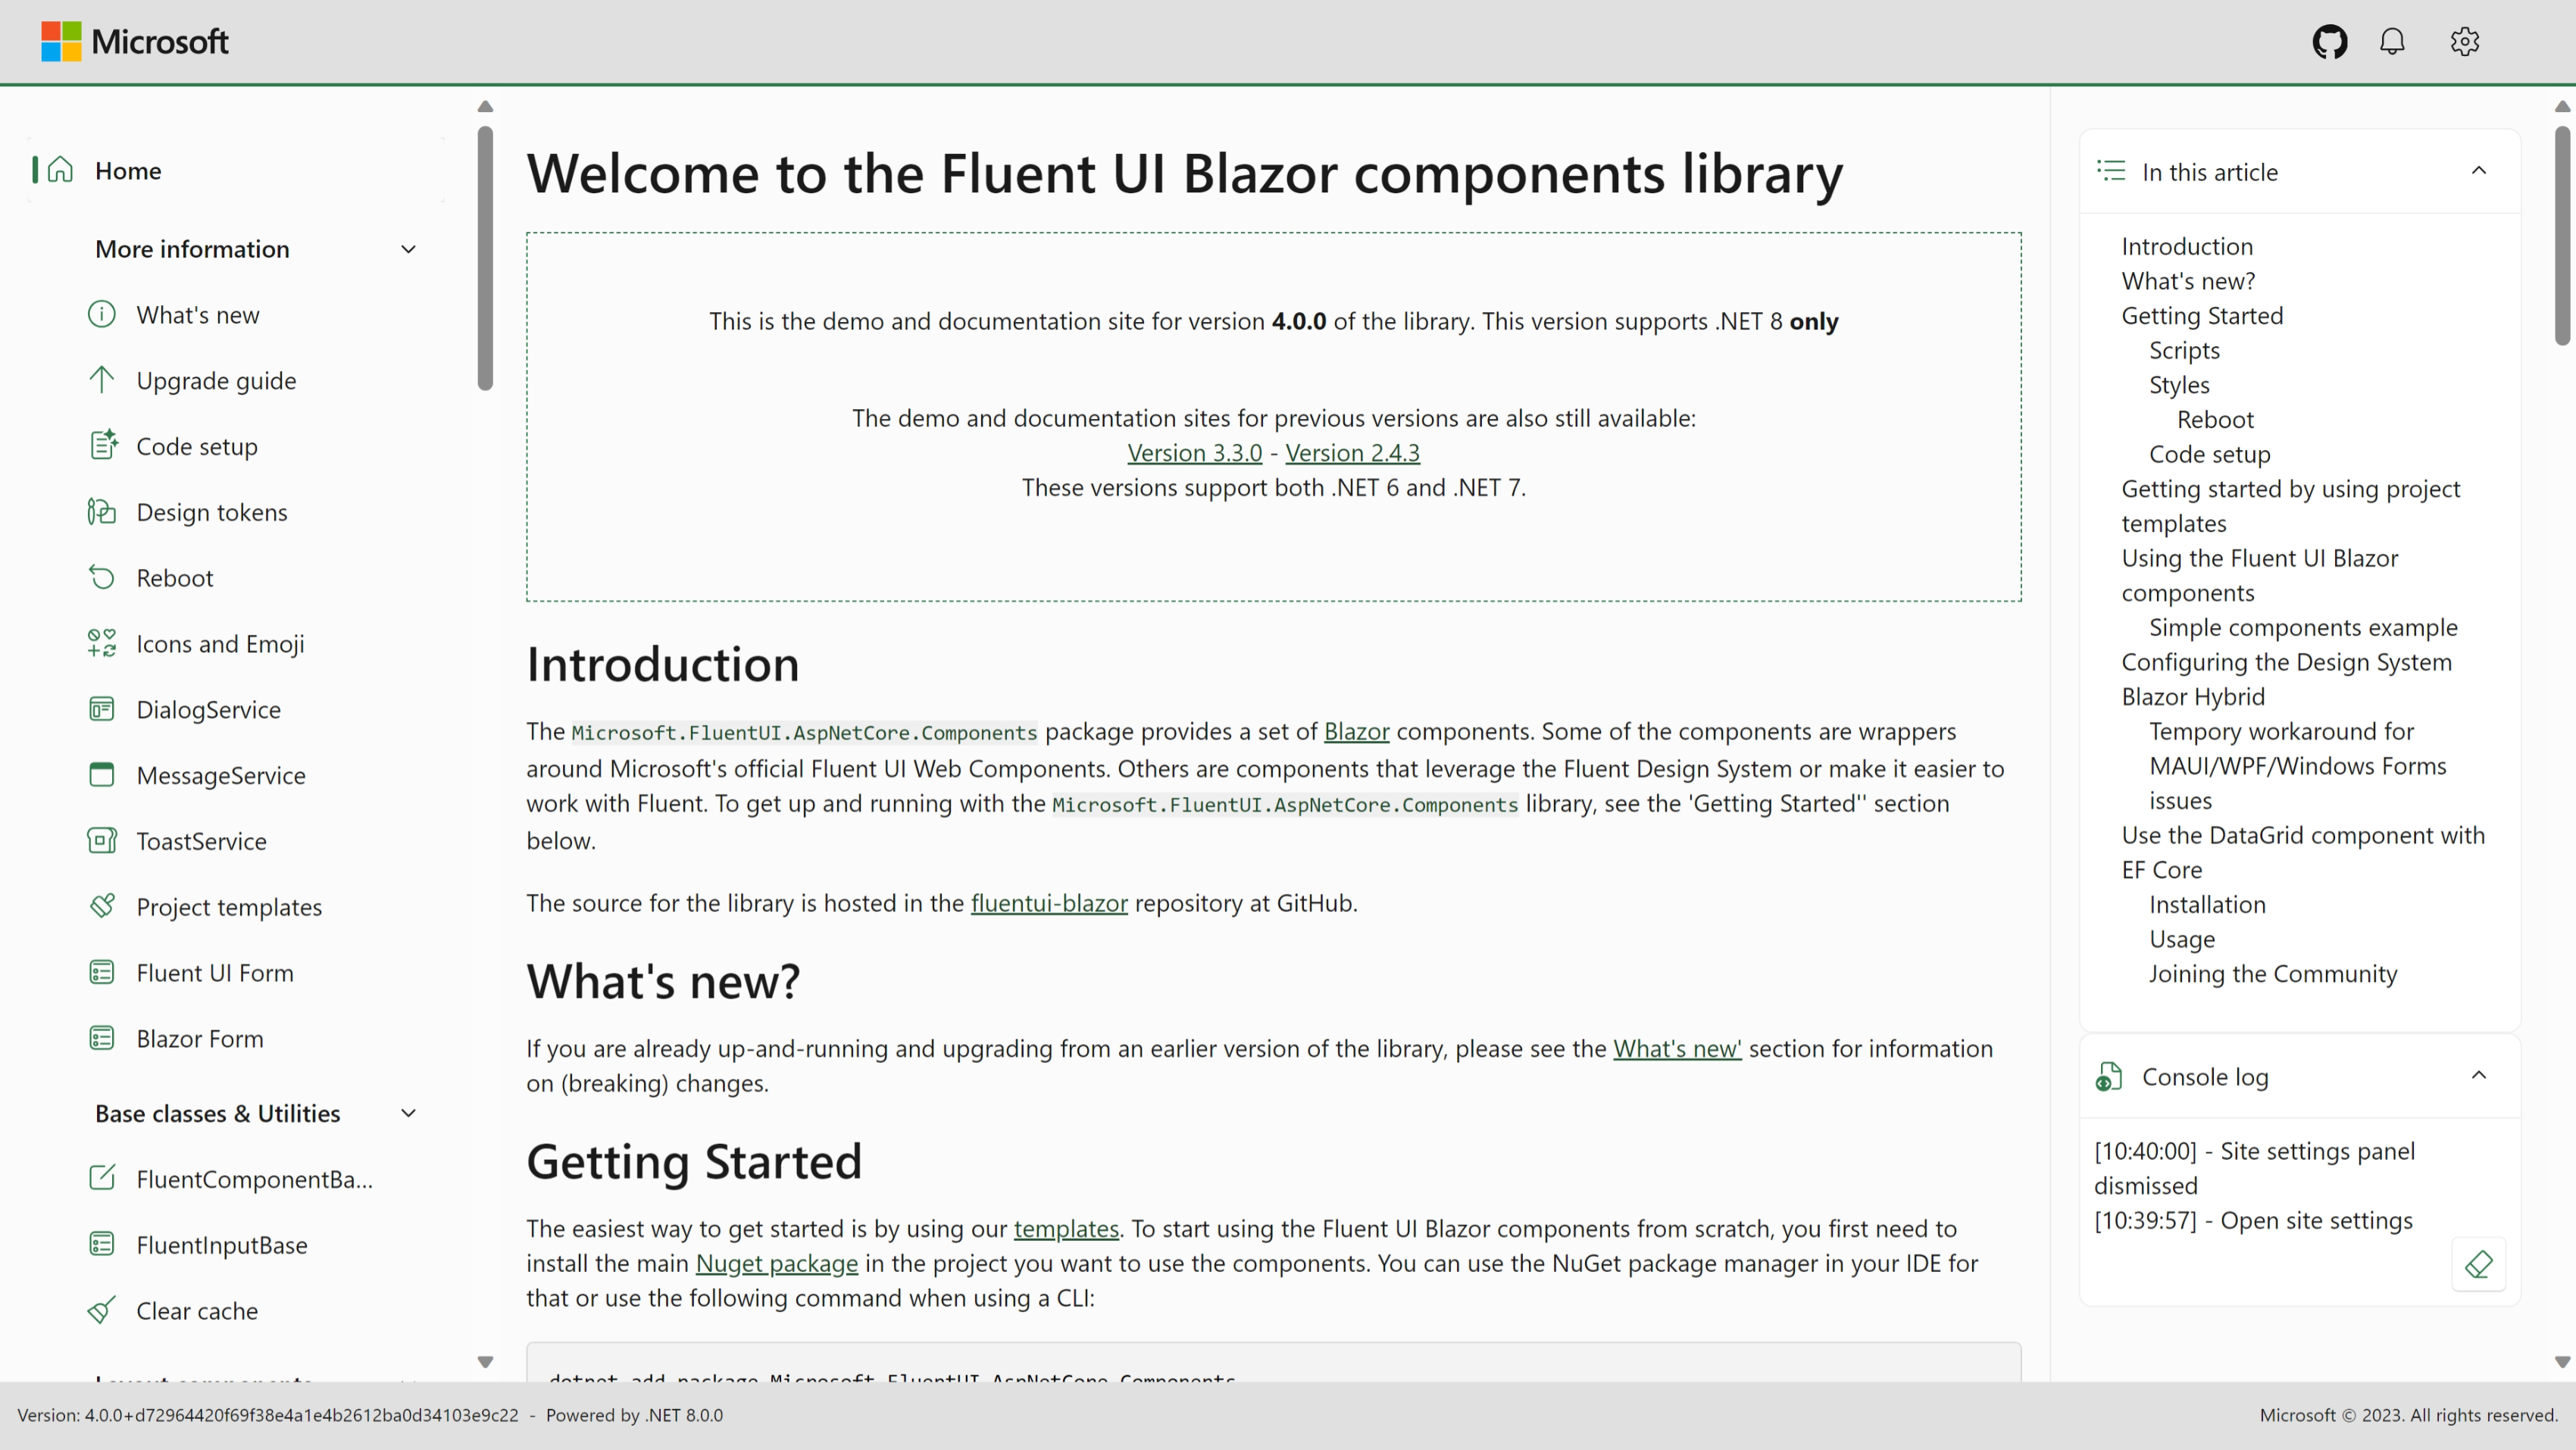 Fluent UI Blazor components